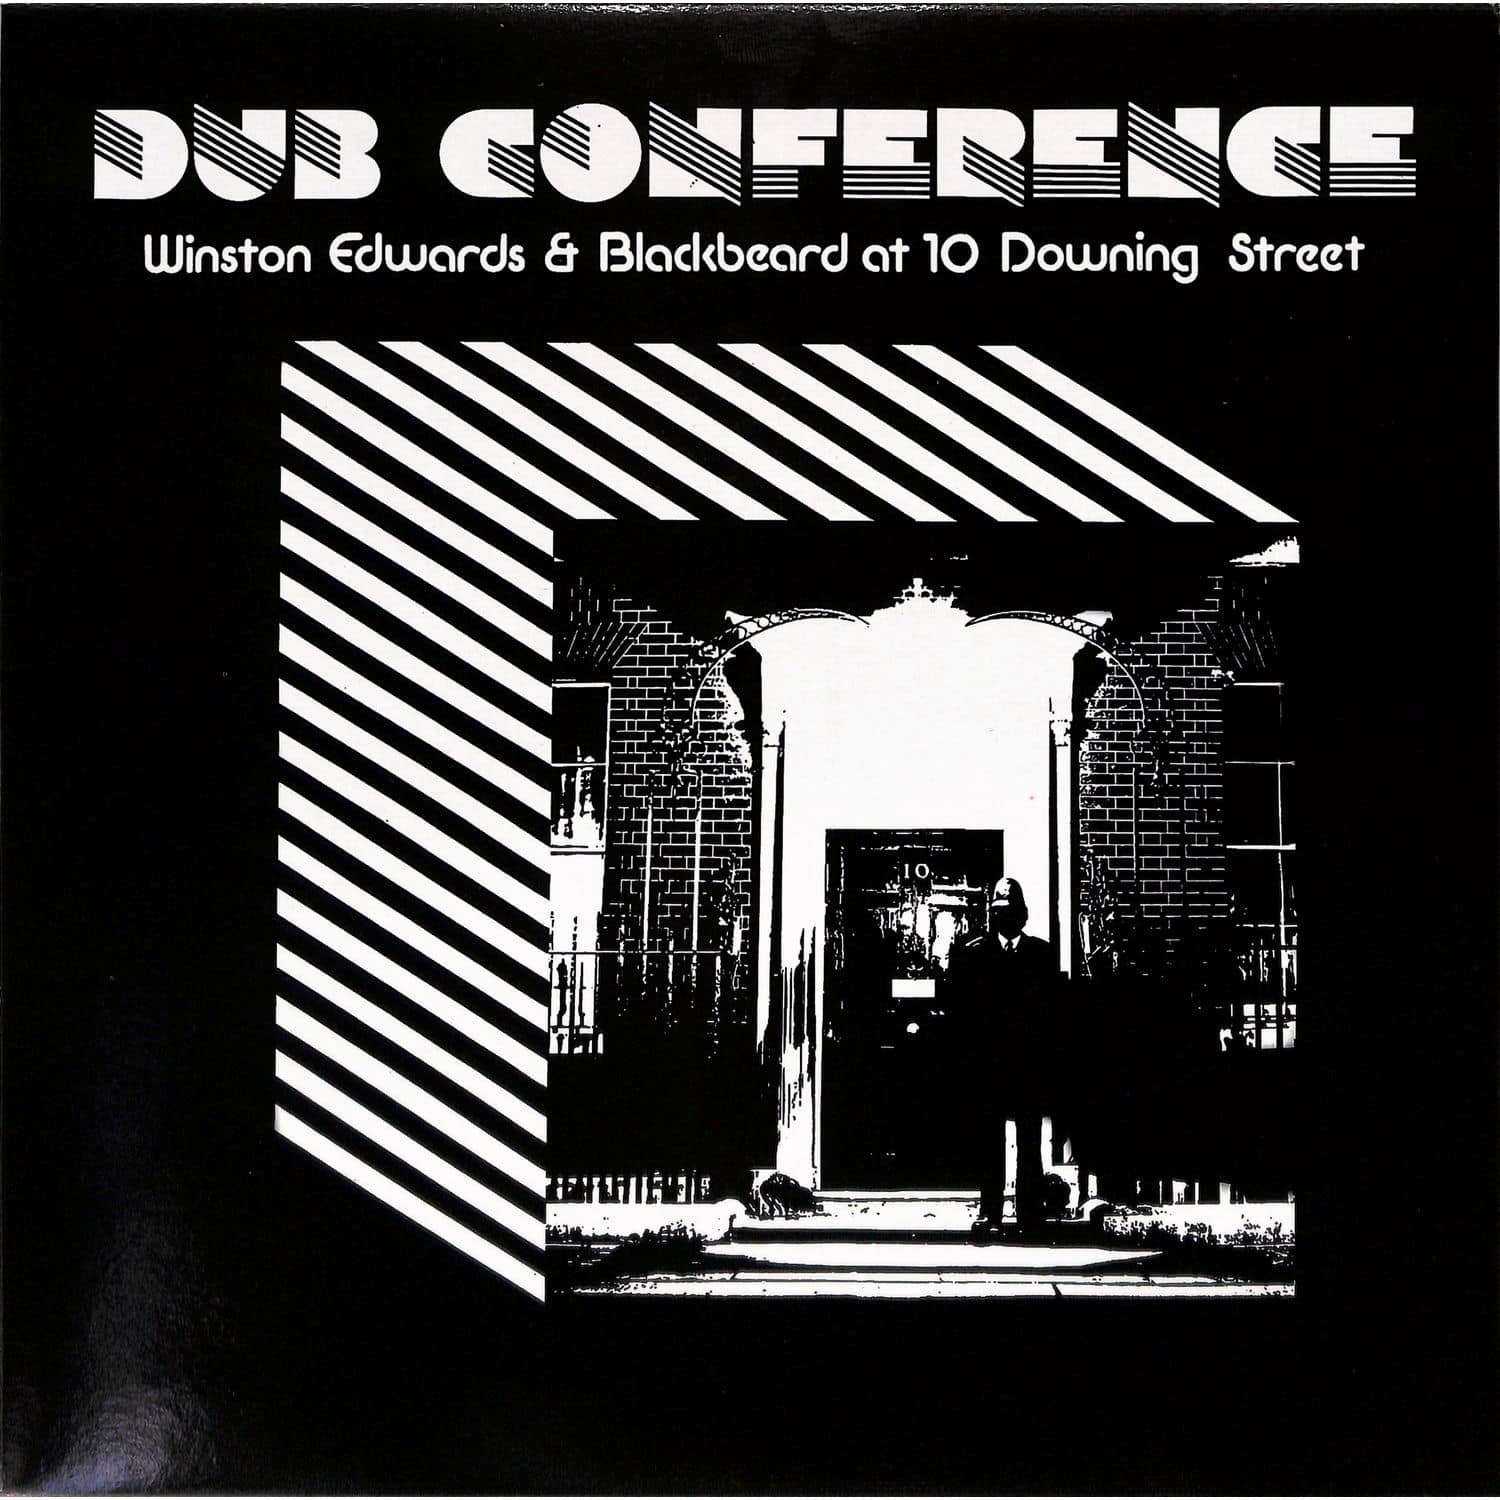 Winston Edwards & Blackbeard - DUB CONFERENCE AT 10 DOWNING STREET 